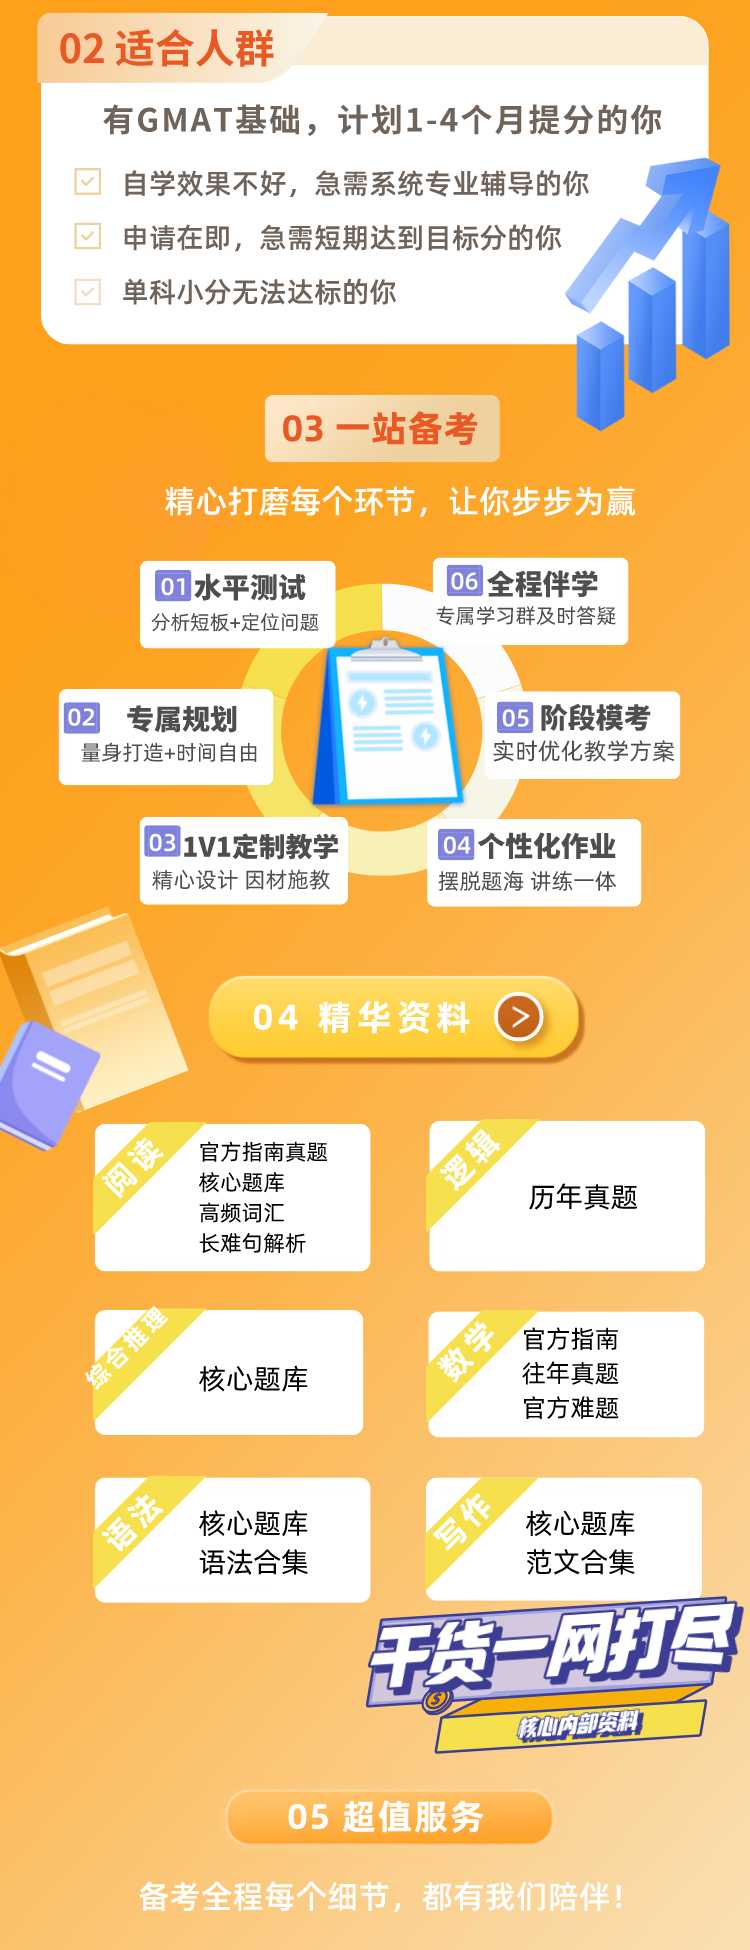 https://simg01.gaodunwangxiao.com/uploadfiles/product-center/202211/18/ad3c6_20221118154658.png